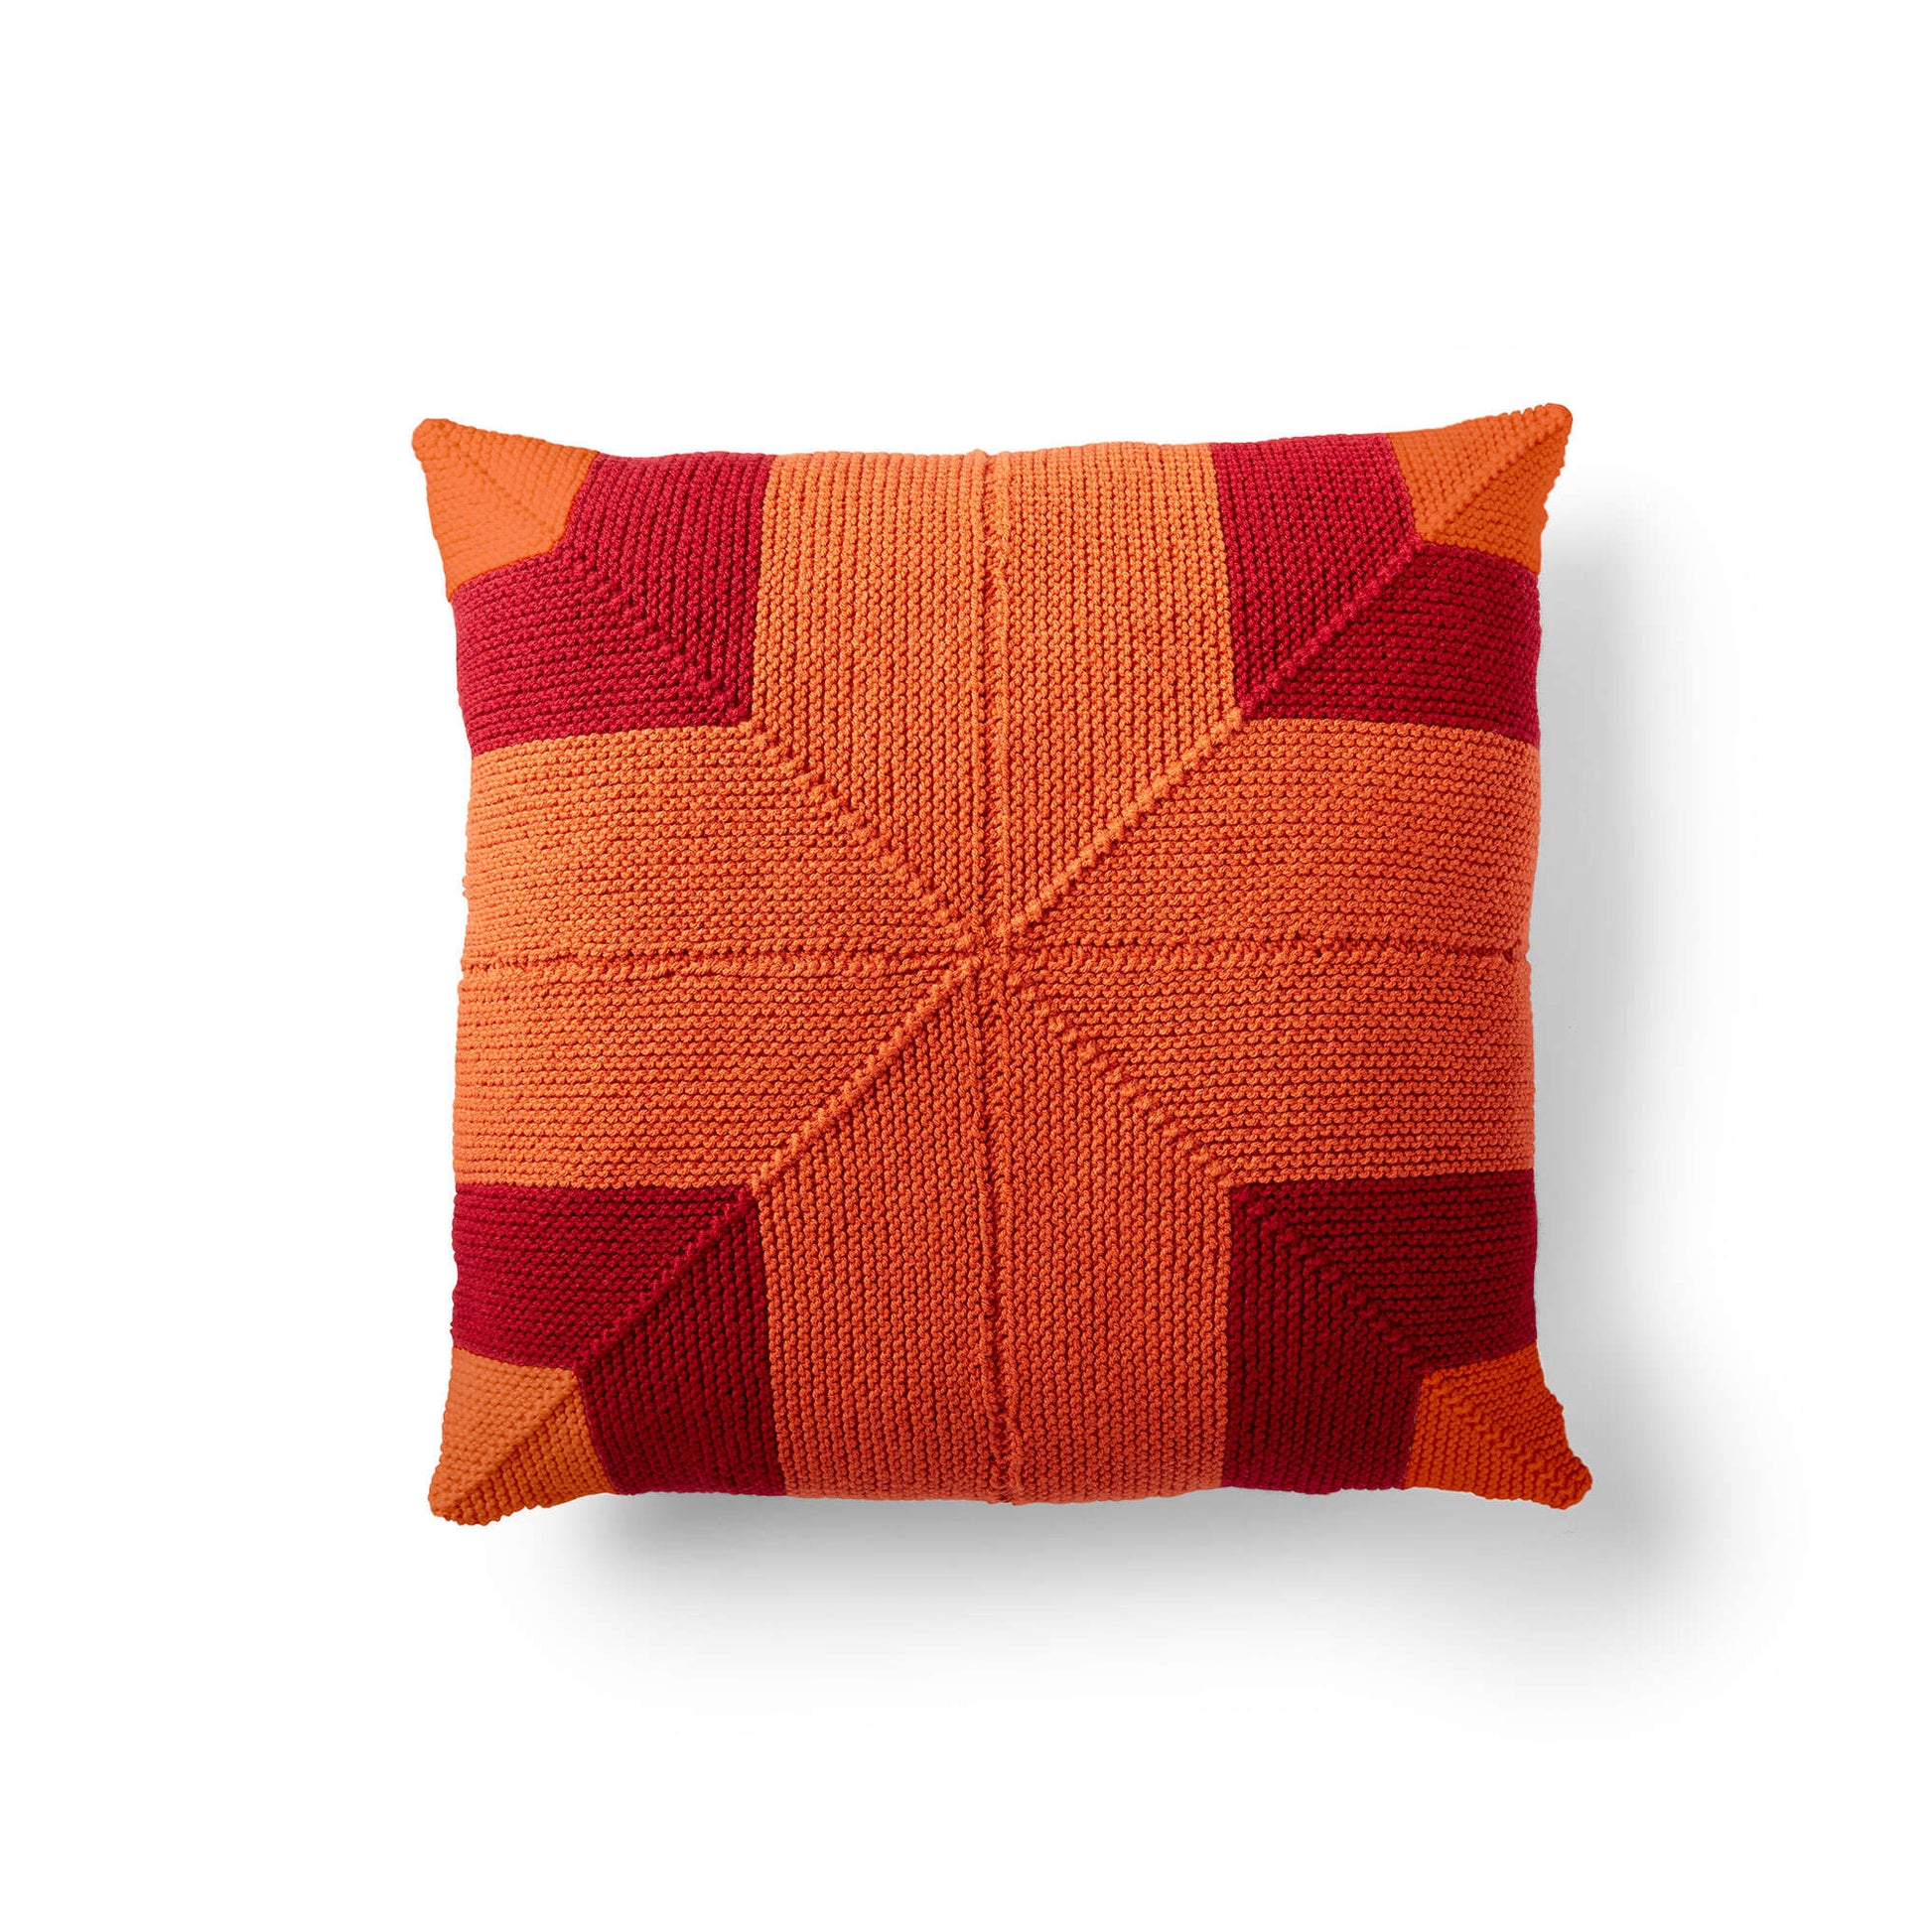 Free Caron Big Statement Knit Pillow Pattern